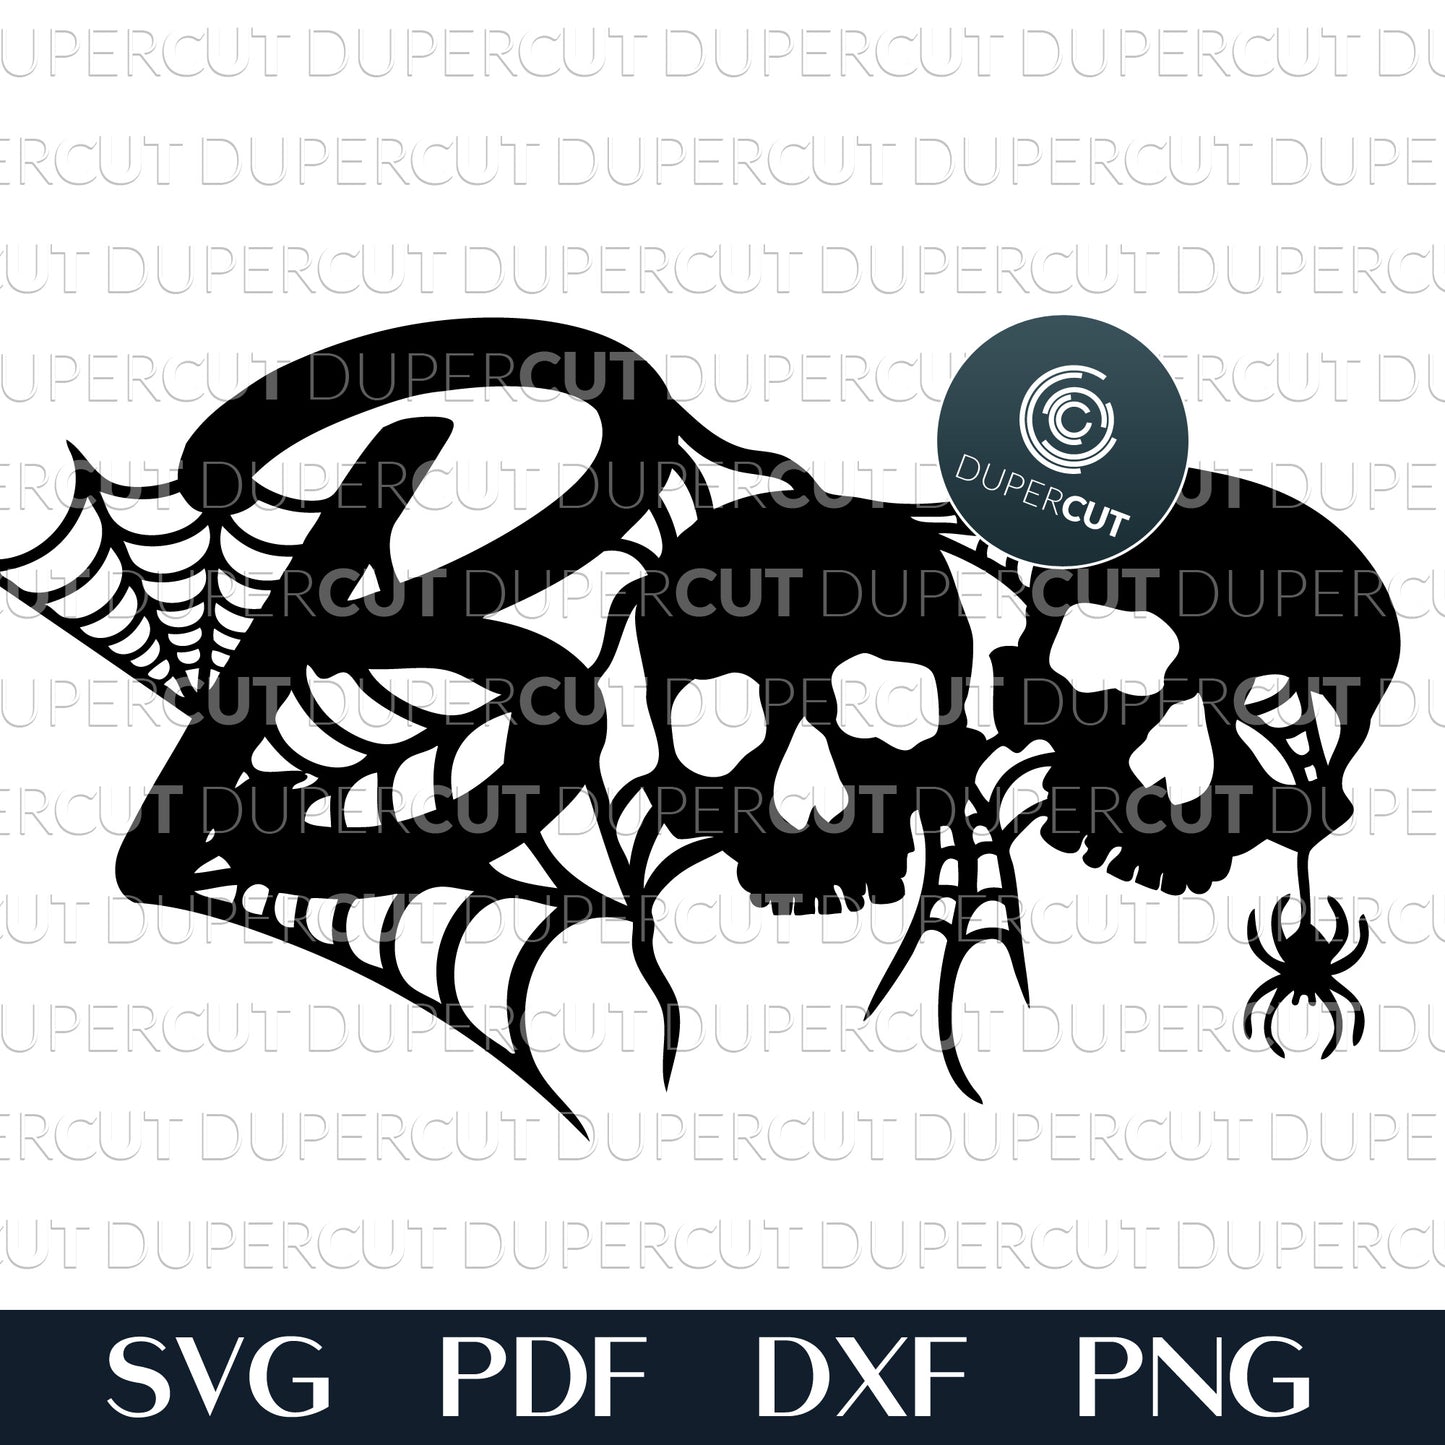 HALLOWEEN bundle - 6 designs - SVG / PDF / DXF